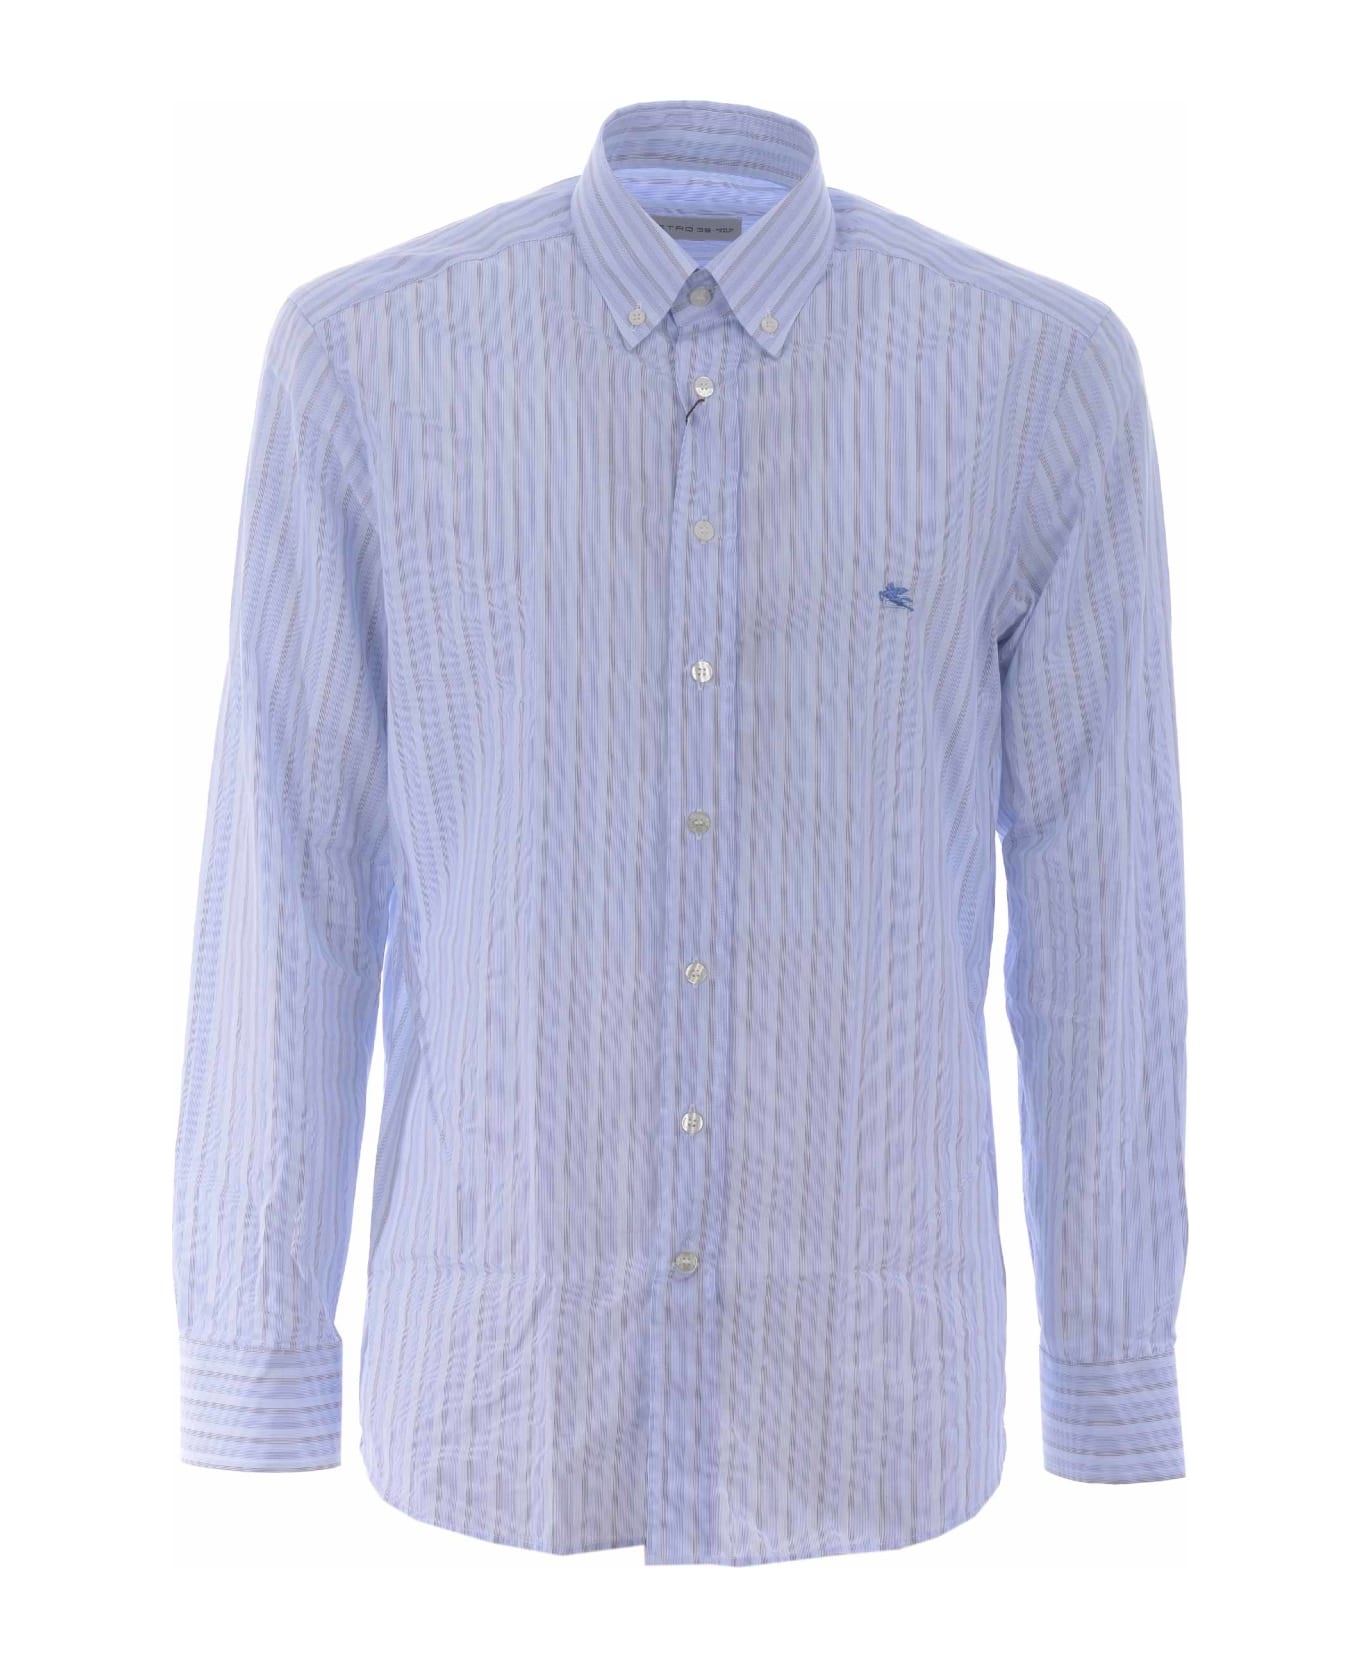 Etro Shirt "regular Button Down" In Striped Cotton - Bianco/blu シャツ